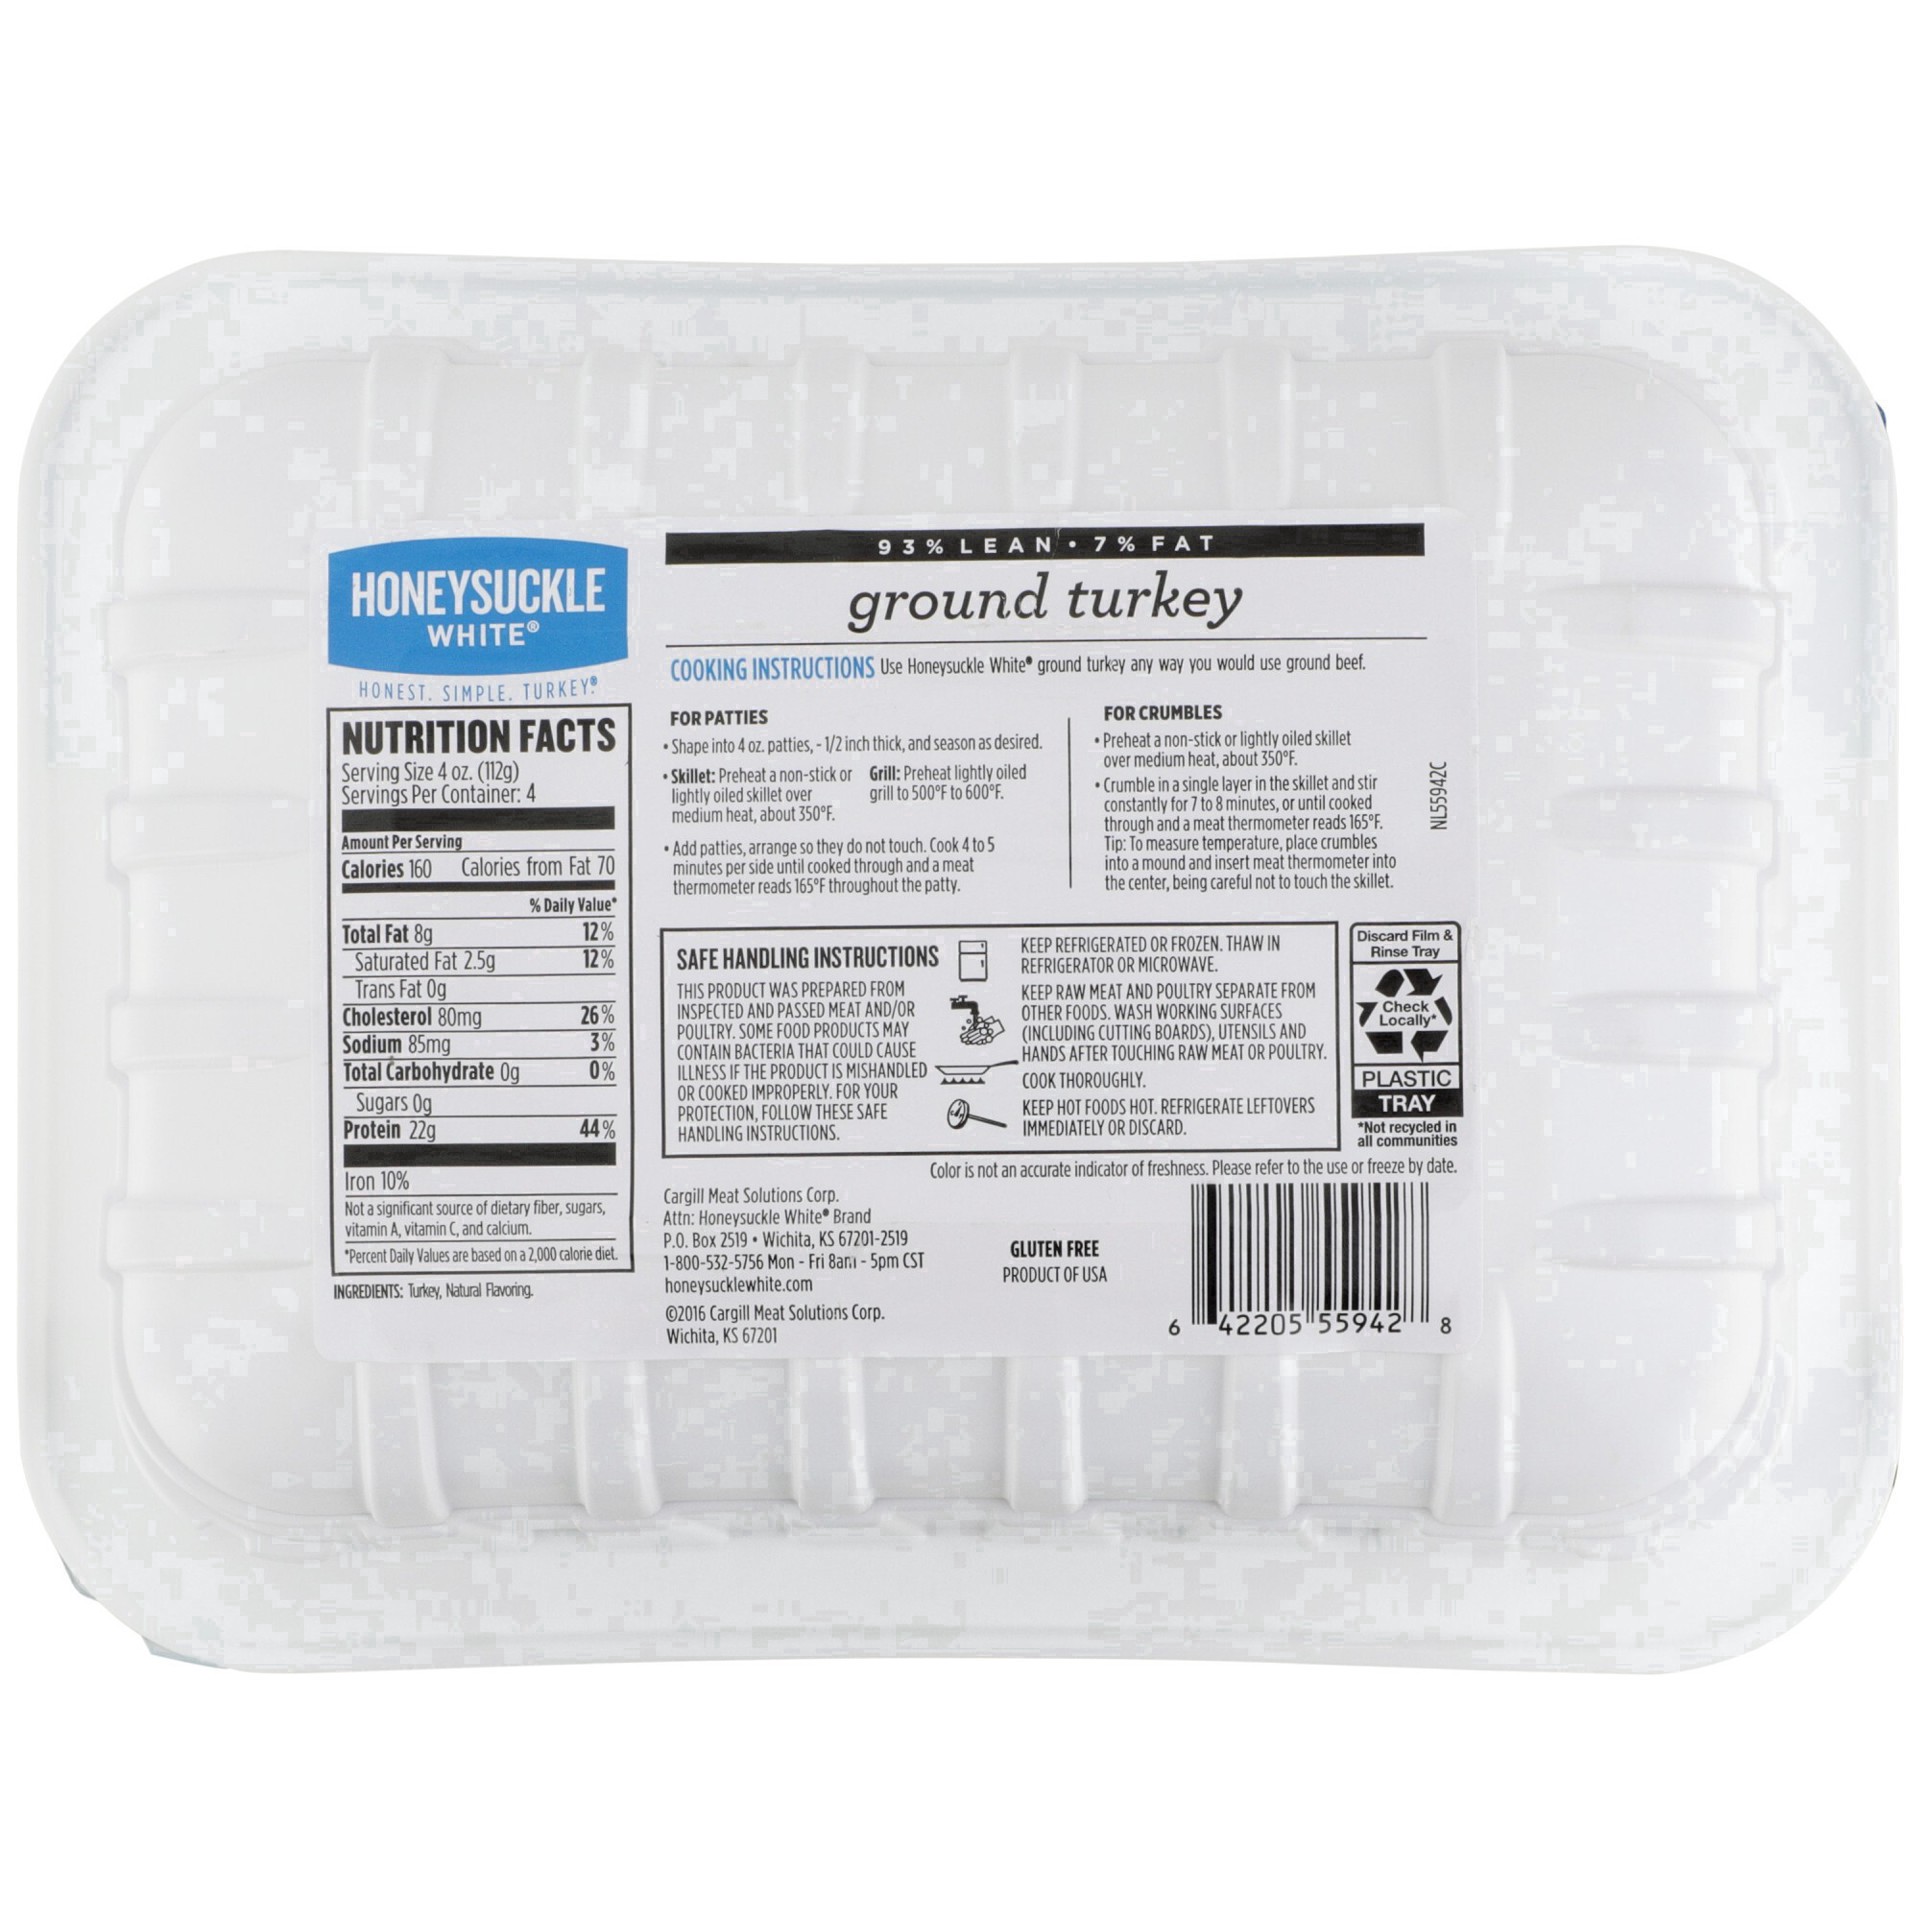 slide 2 of 50, Honeysuckle White 93% Lean Fat Ground Turkey Tray, 16 oz